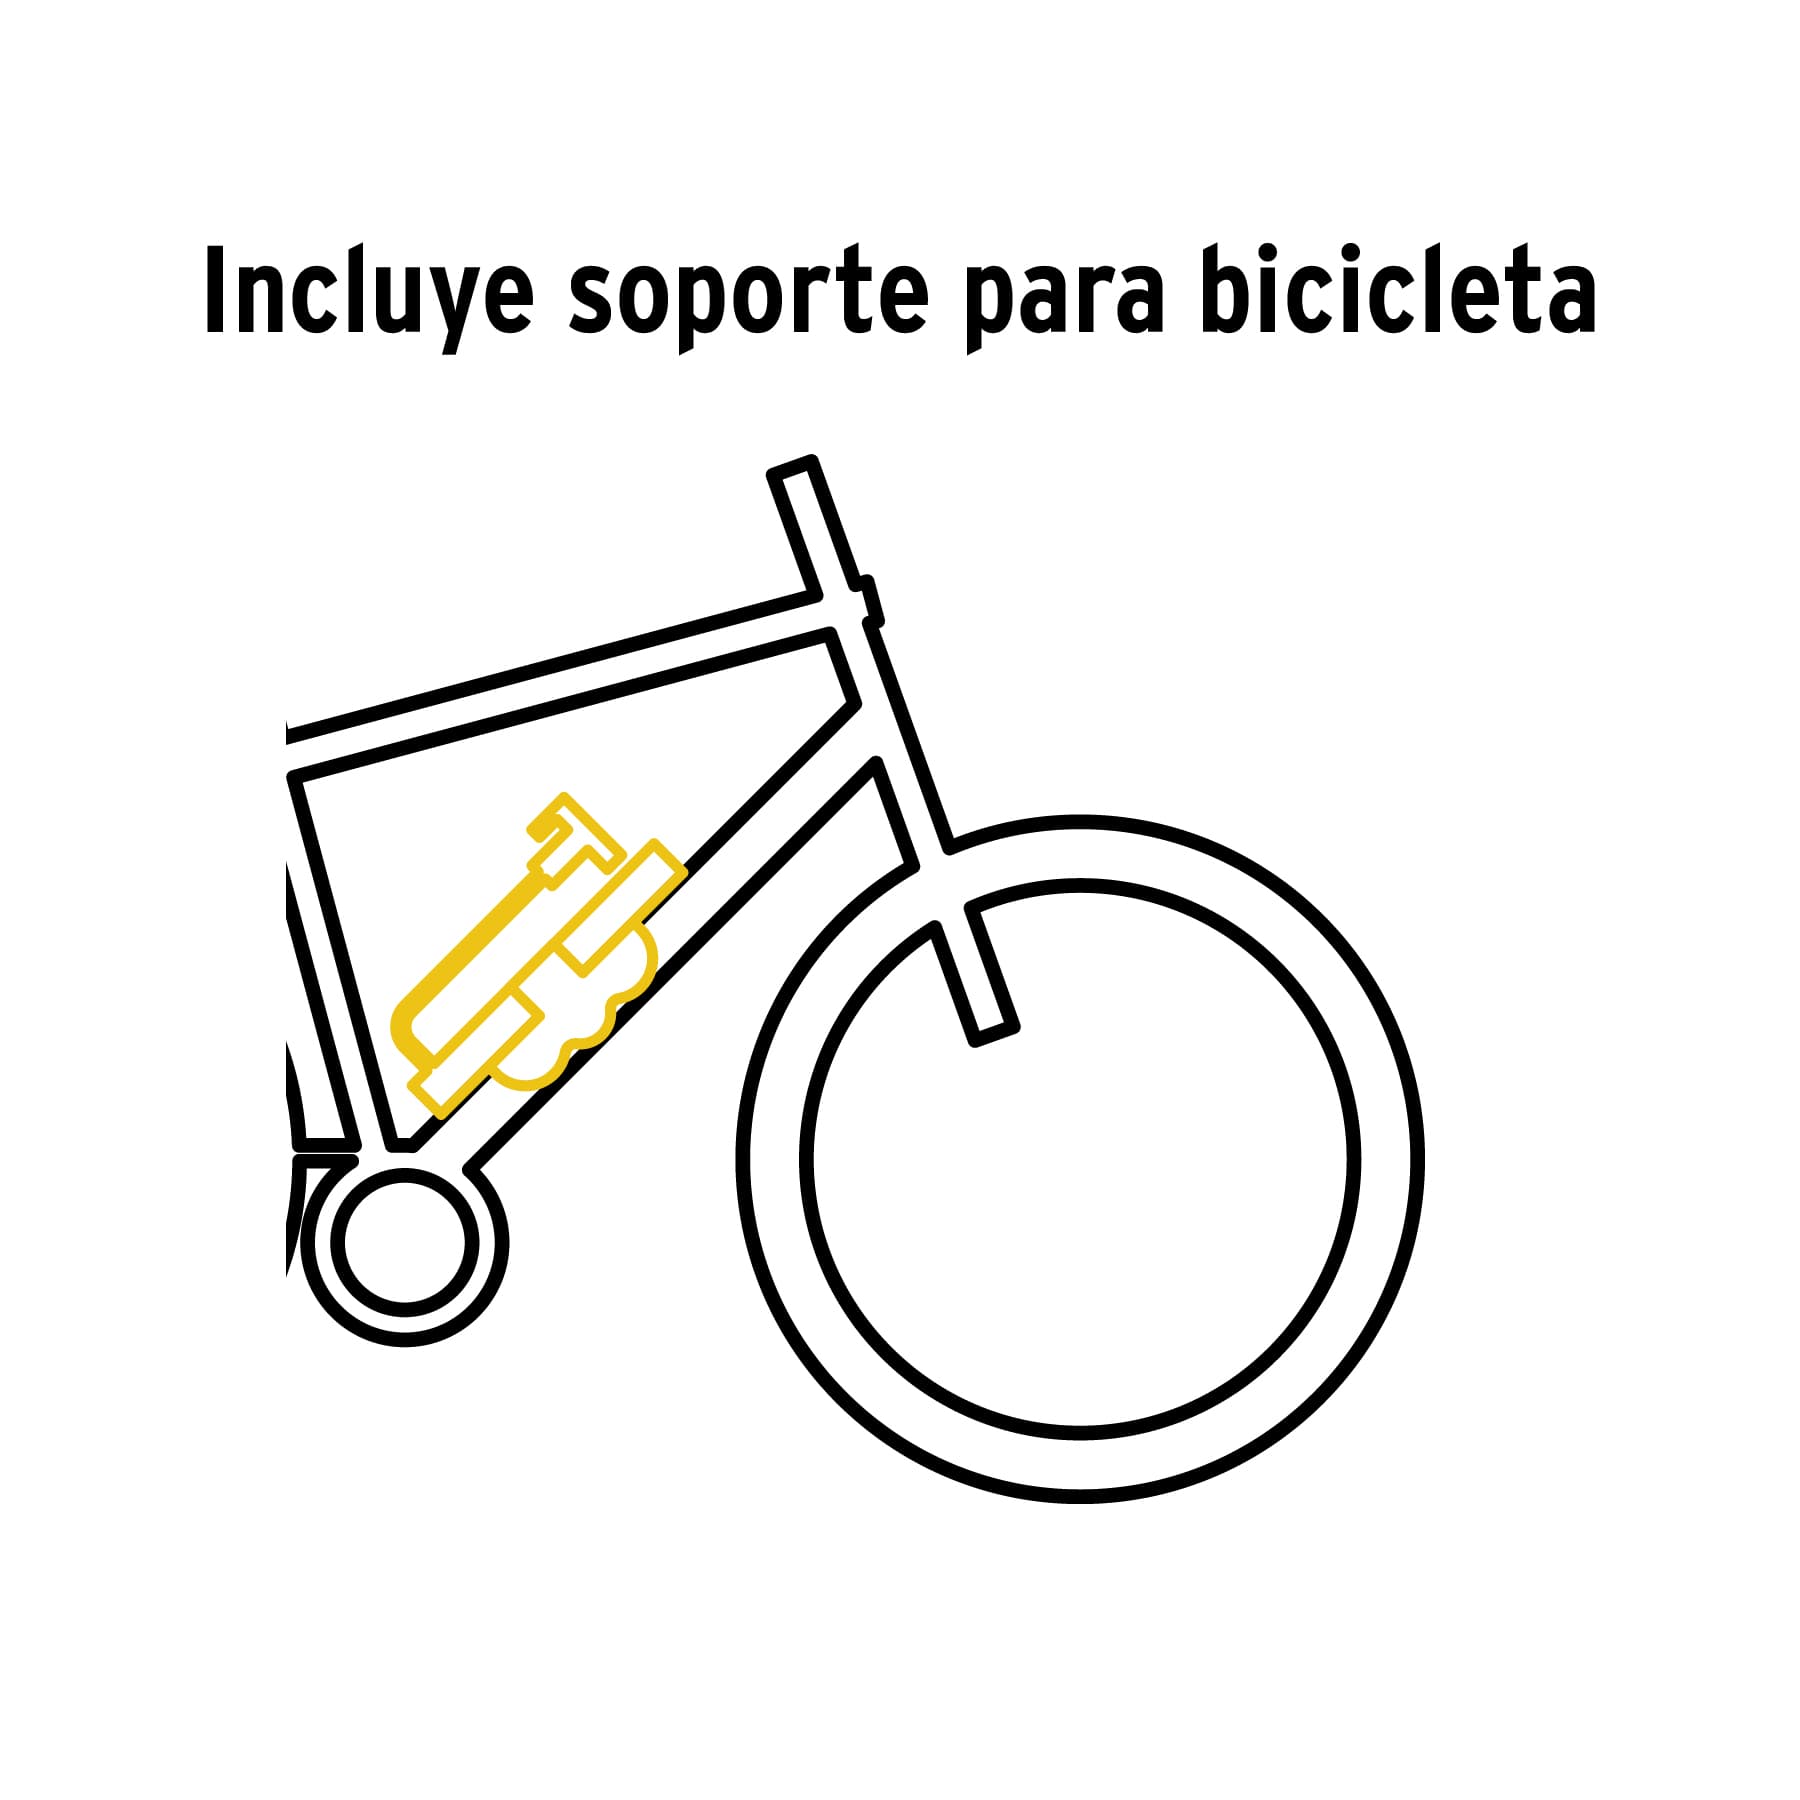 Mini Bomba Manual Para Bicicleta, 60 PSI. TRUPER. - FERRETERÍA WITZI